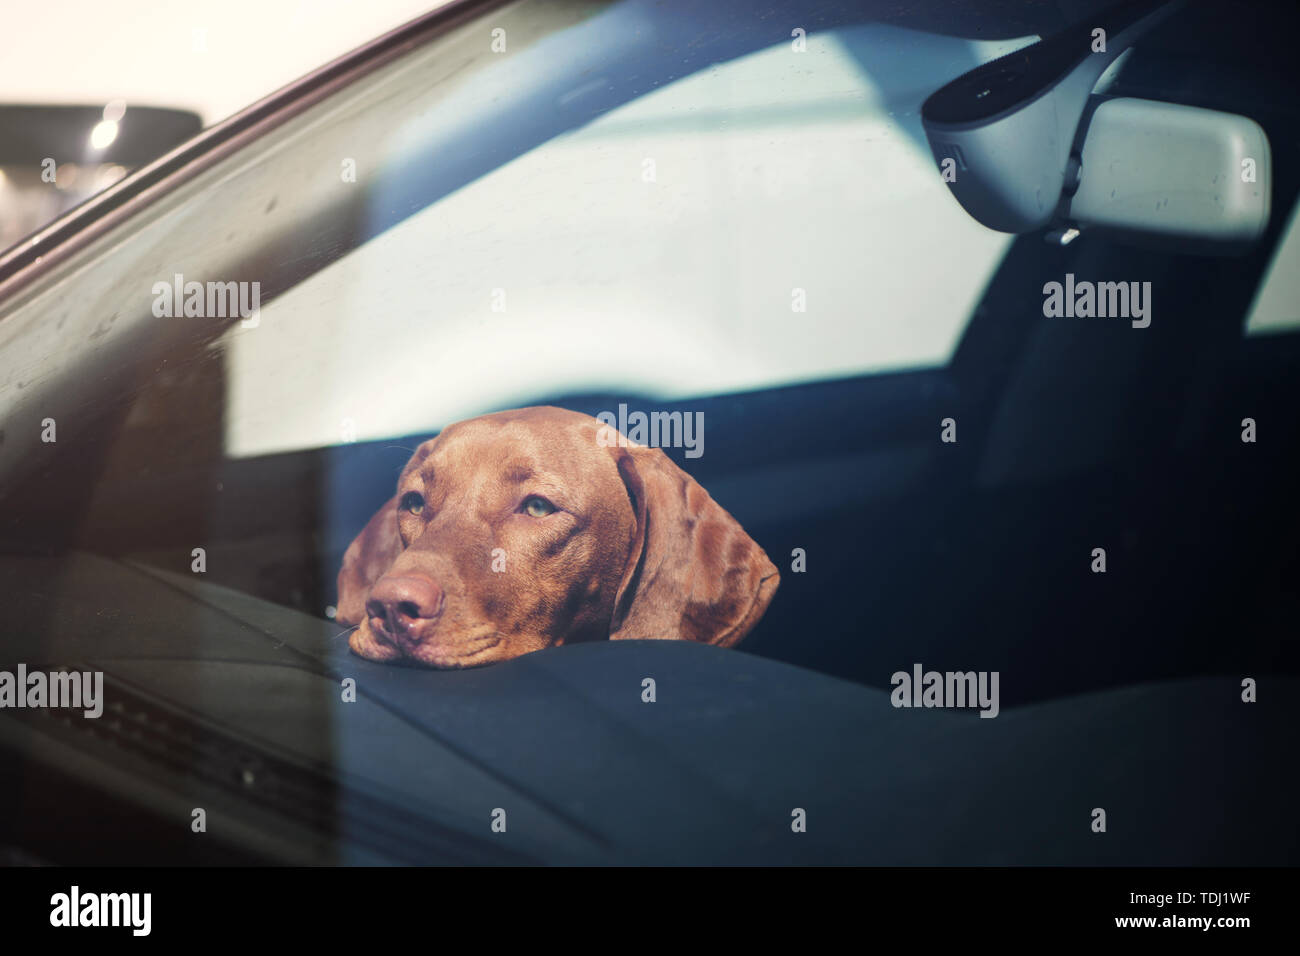 Dog left alone in locked car. Abandoned animal concept. Stock Photo